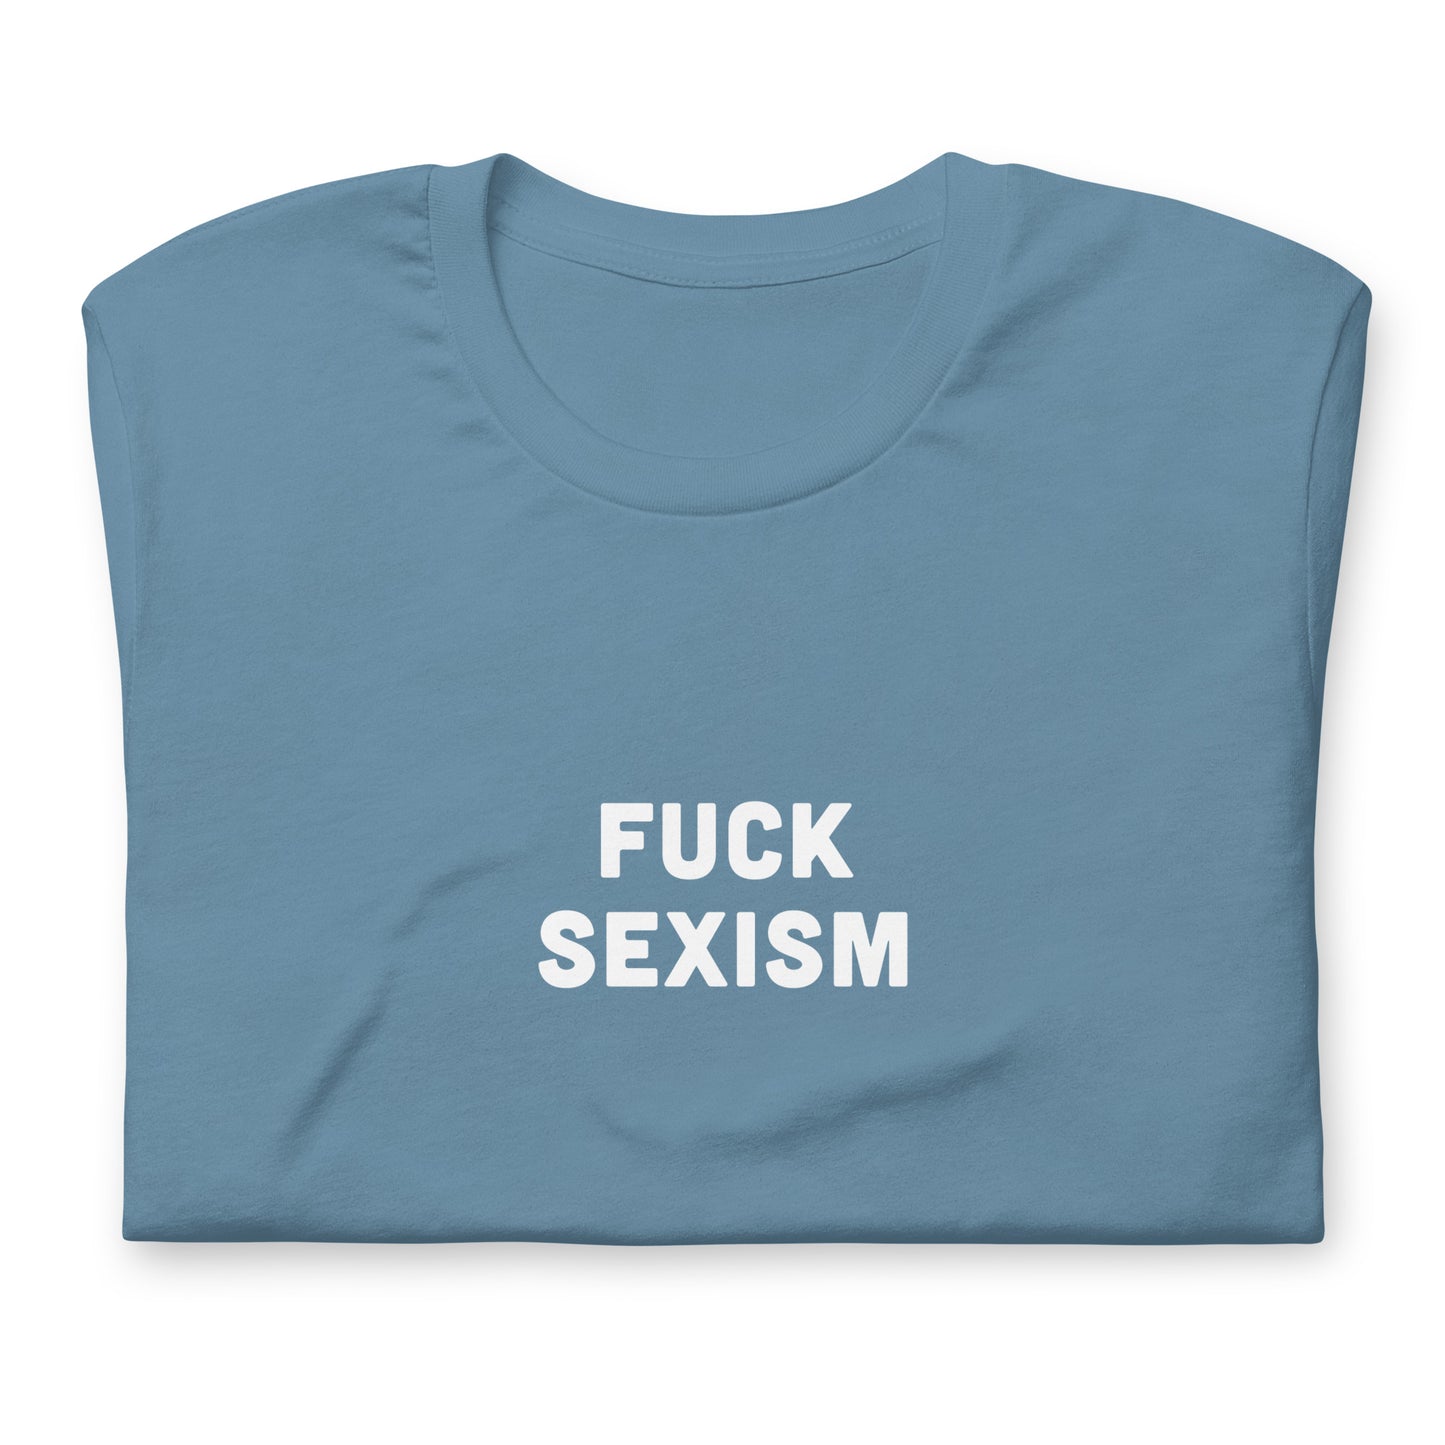 Fuck Sexism T-Shirt Size M Color Forest